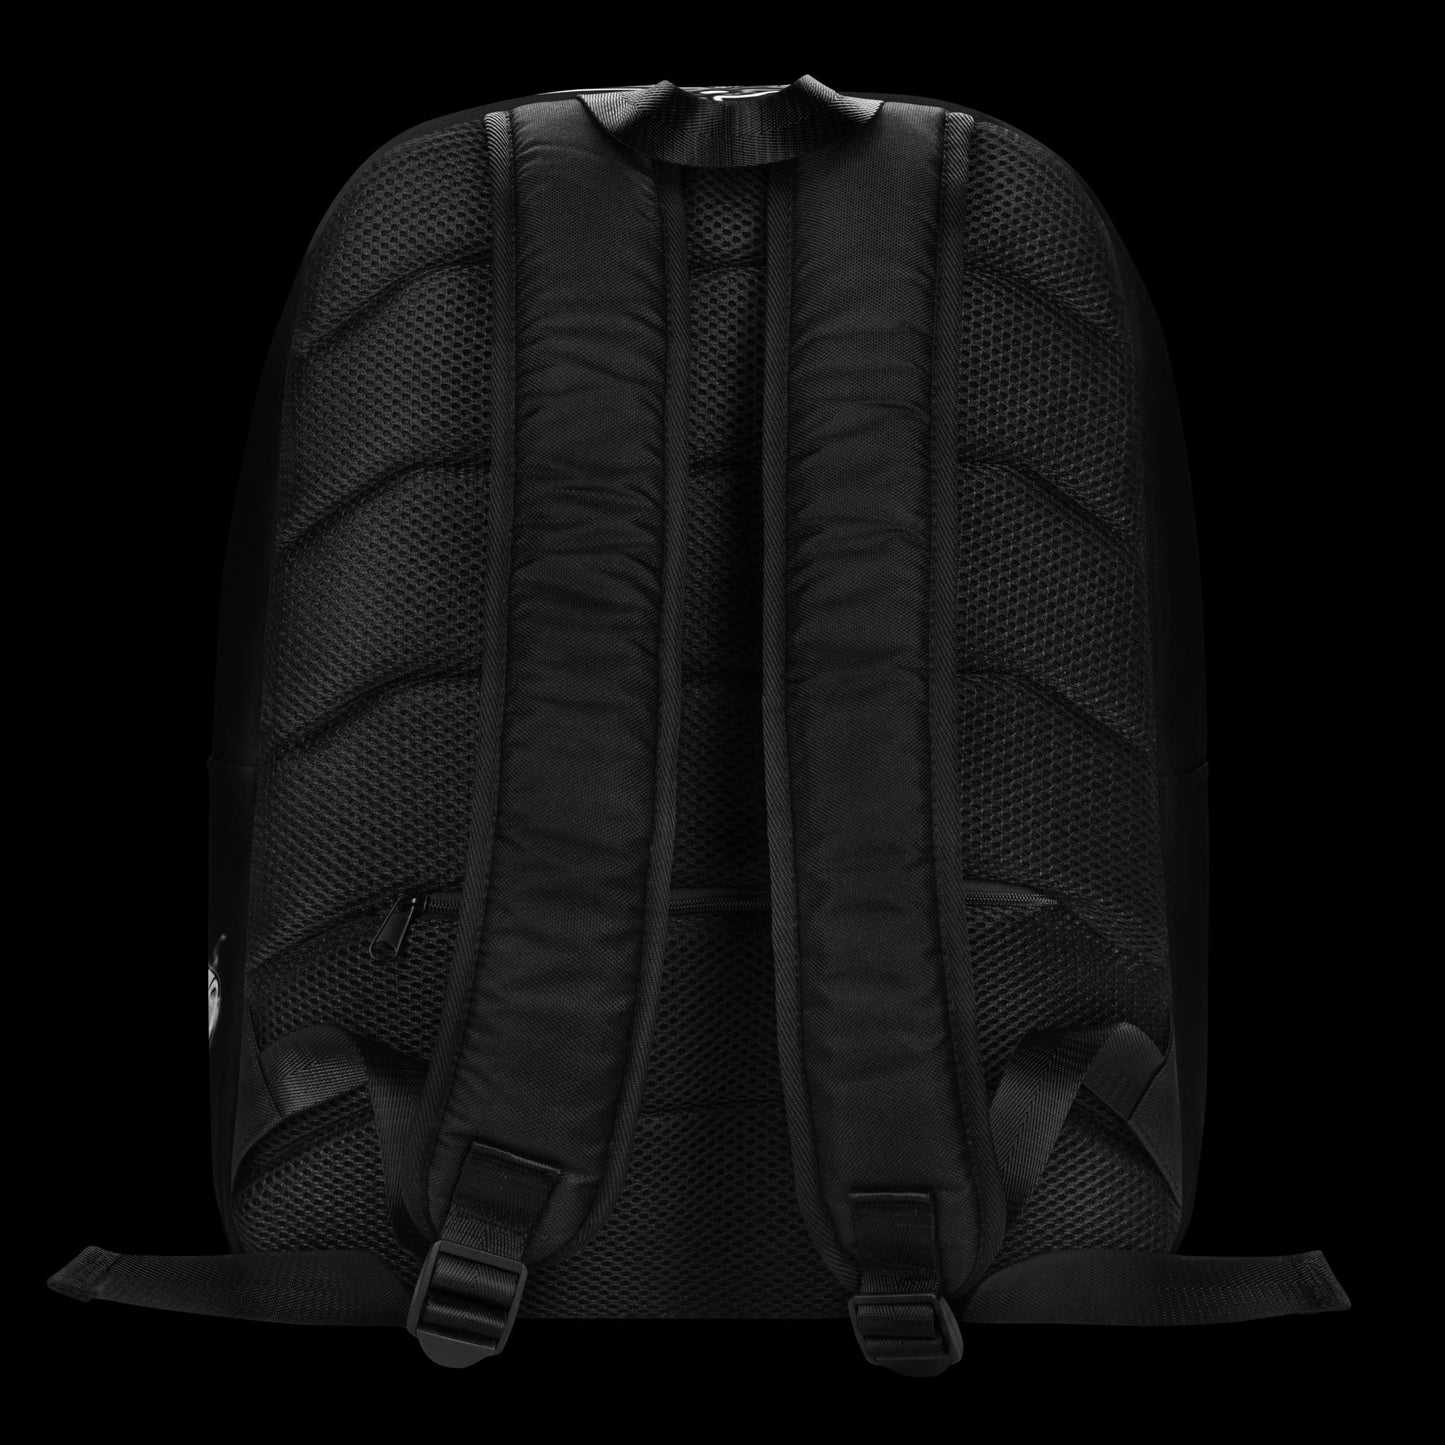 STR8 GAS Minimalist Backpack